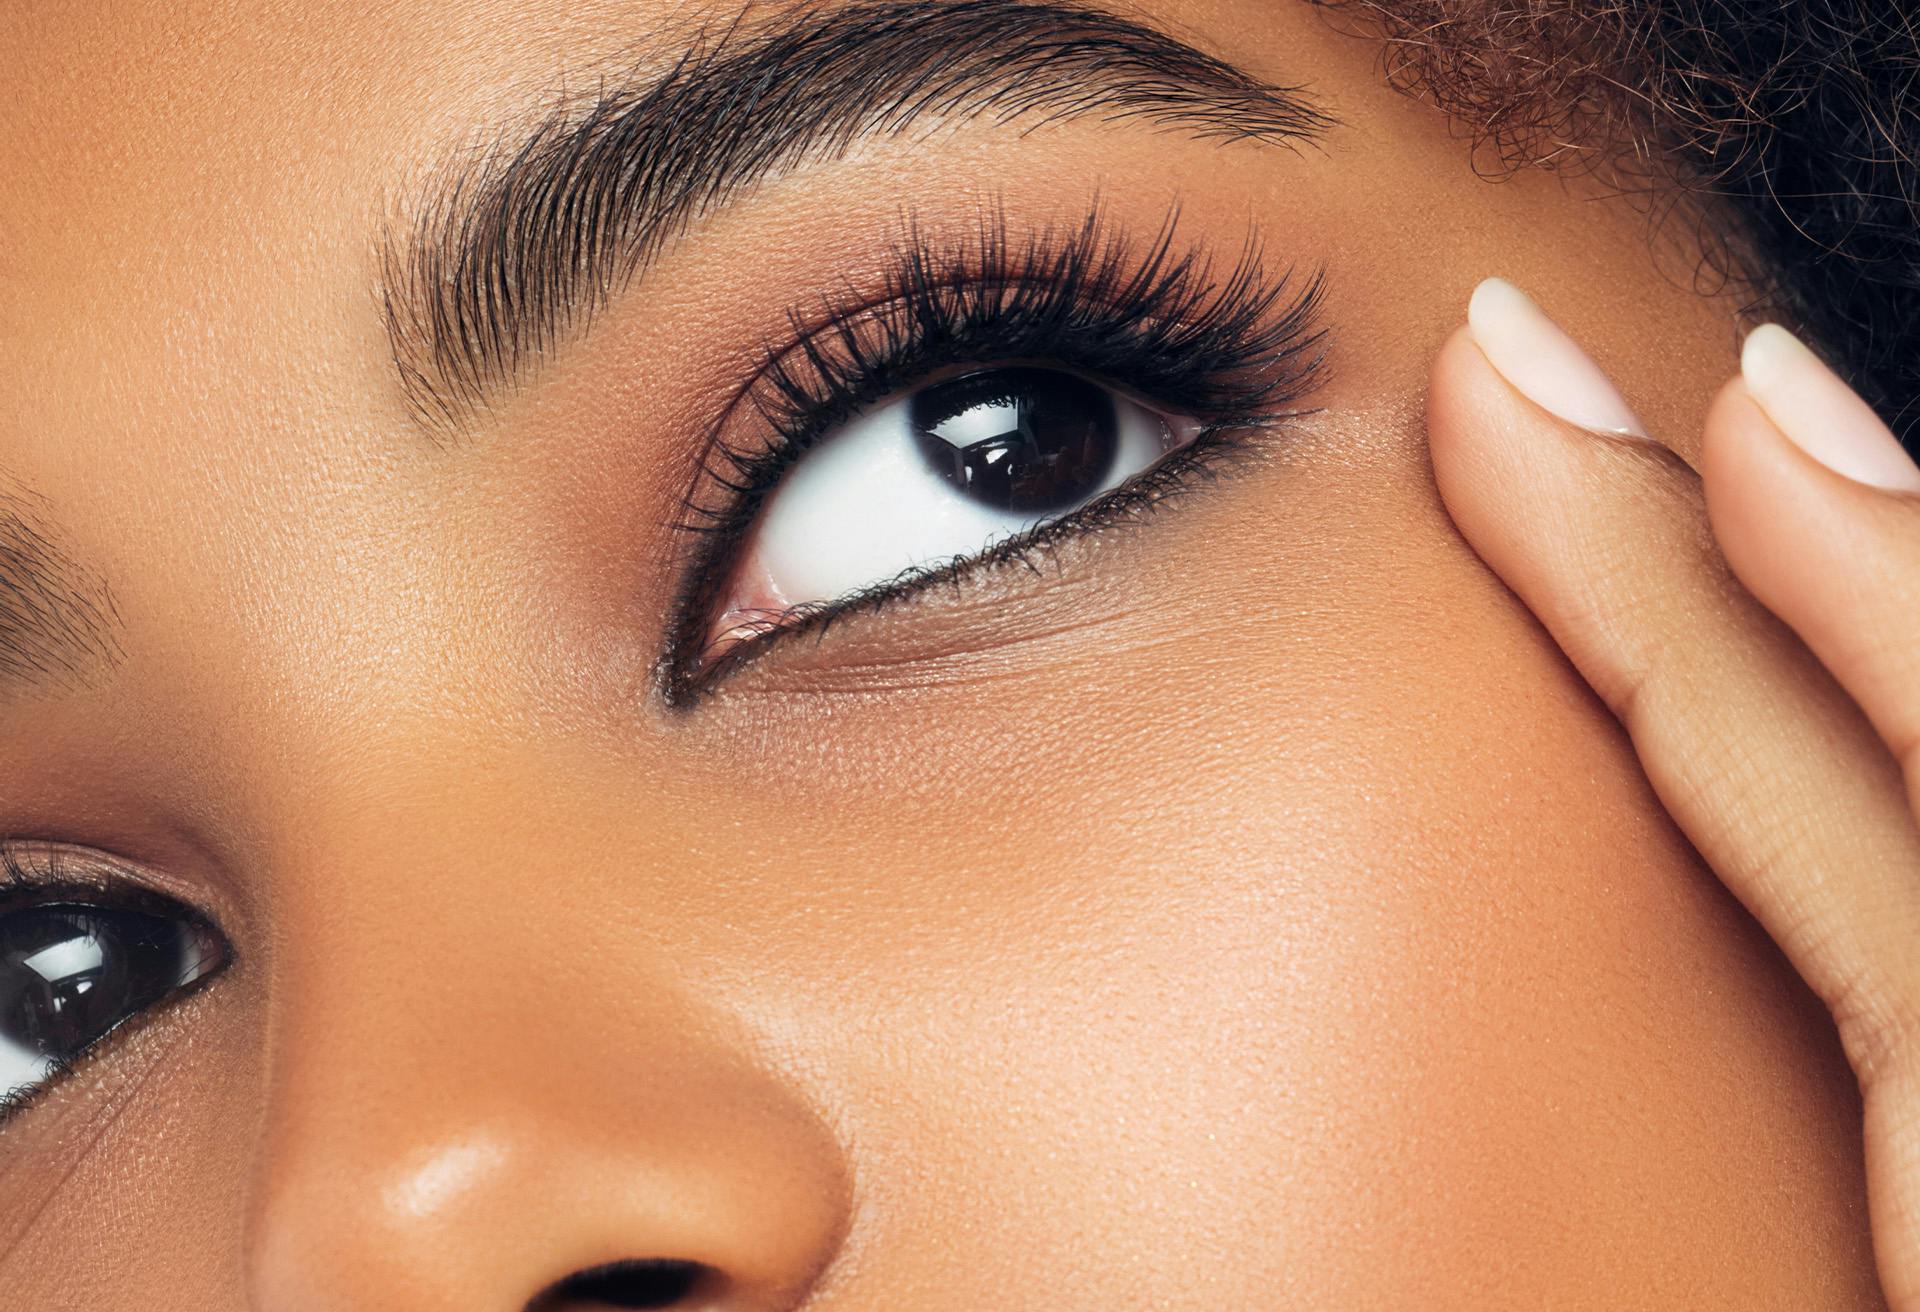 Woman's eye with long eyelashes wearing eyeliner